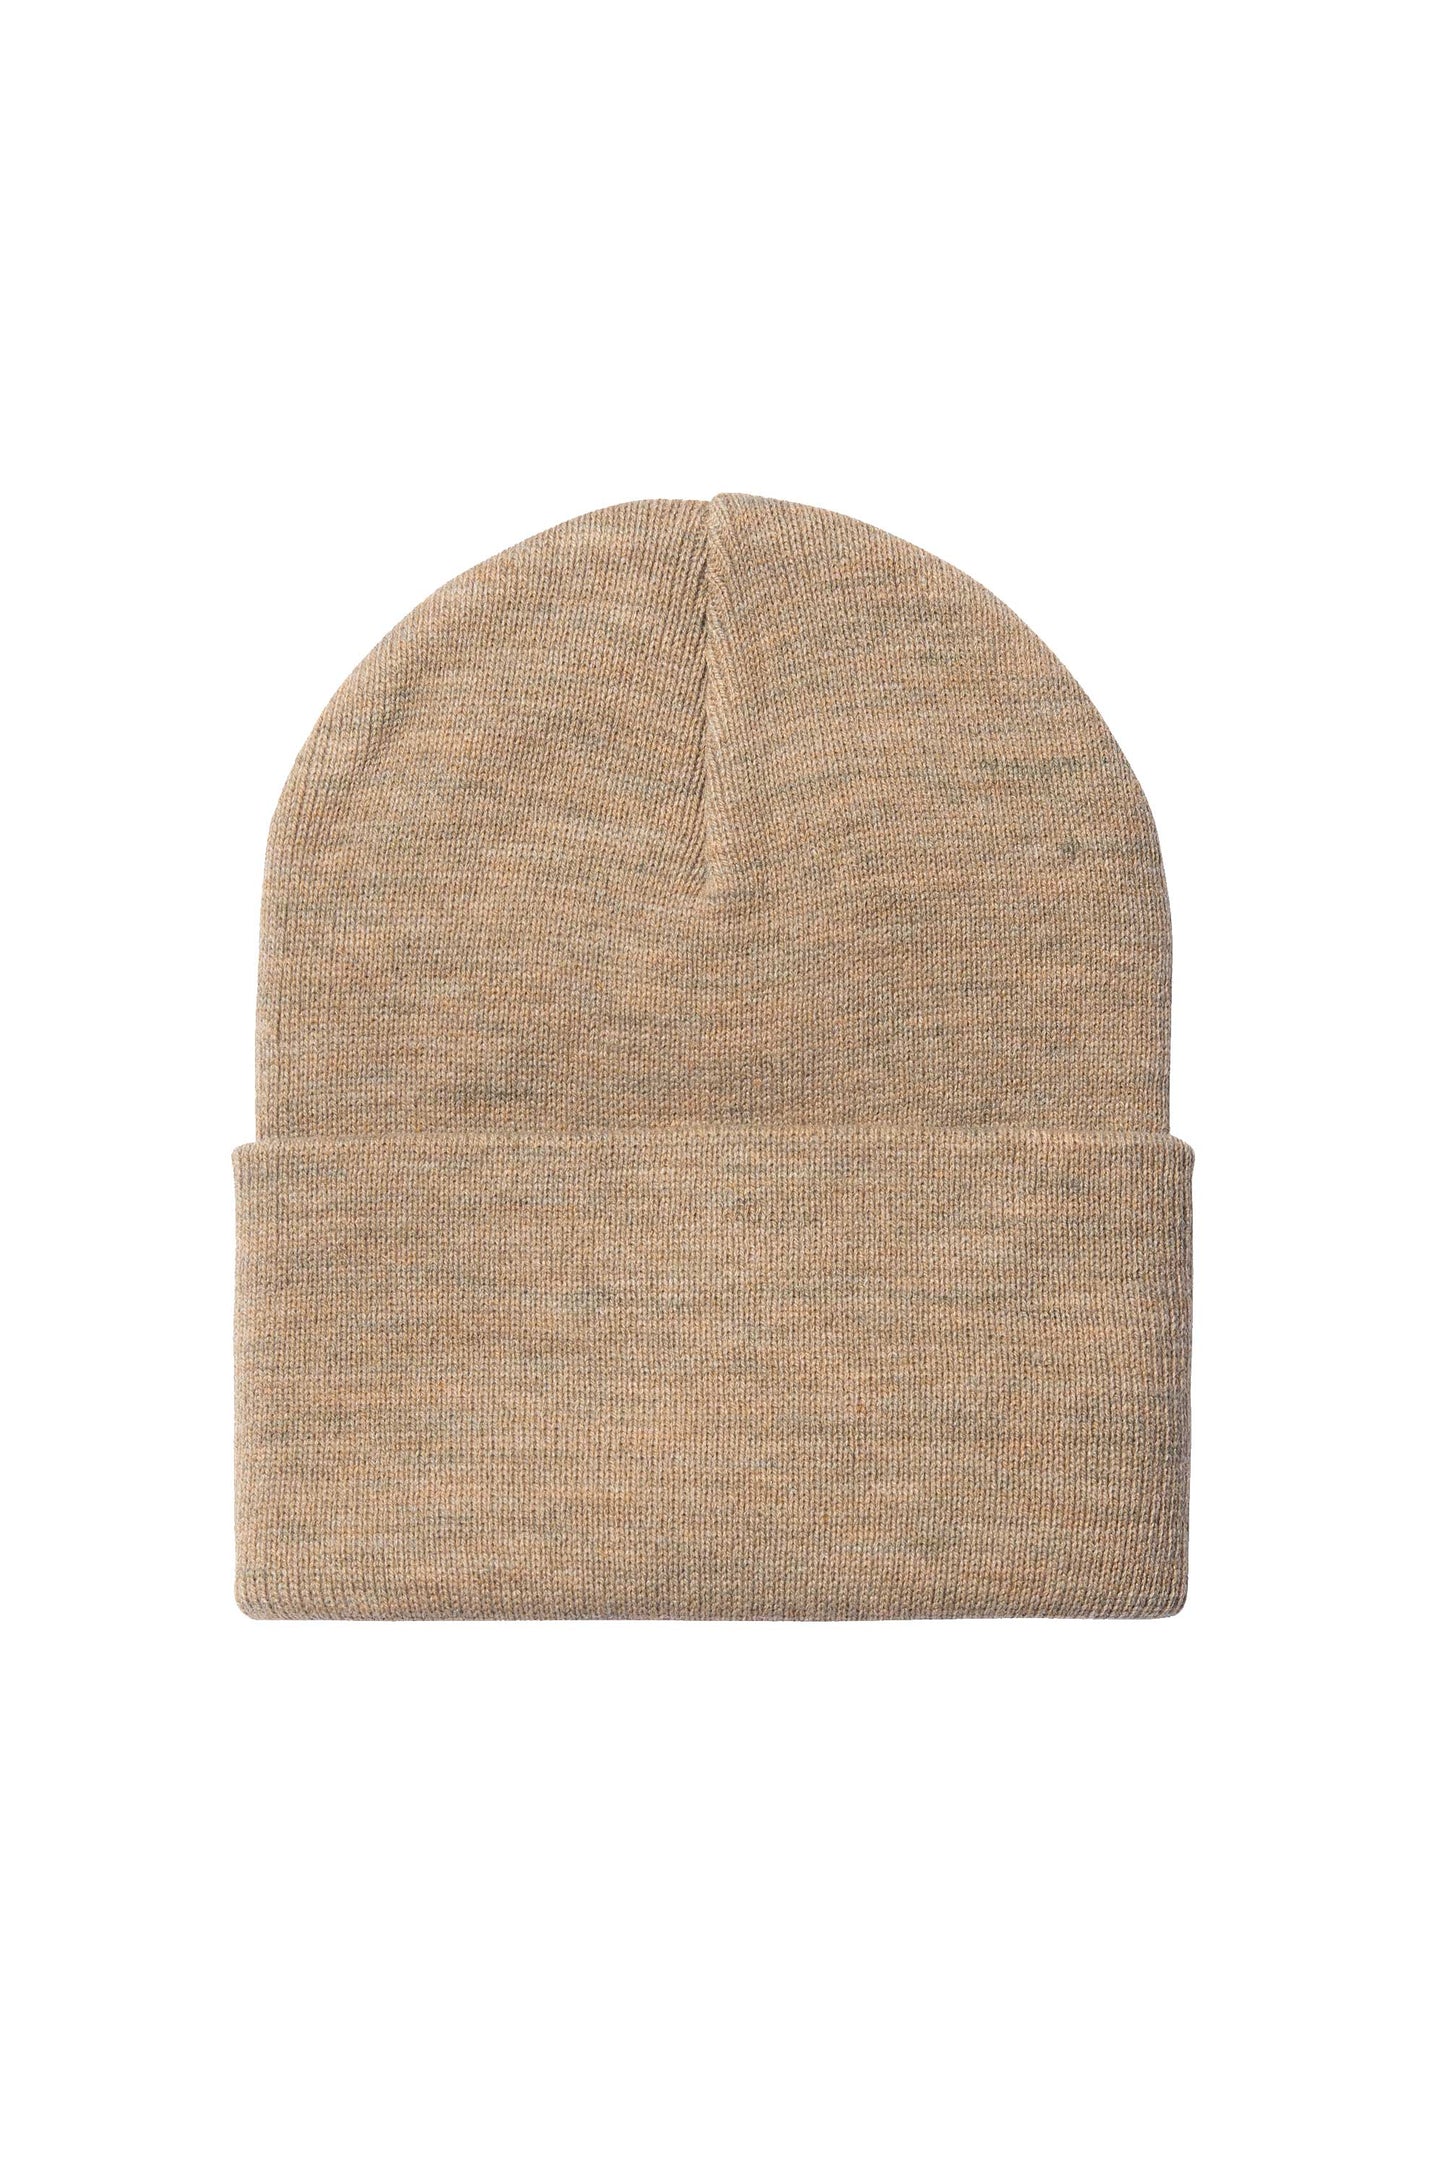 Pukas-Surf-Shop-carhartt-hat-acrylic-hat-leather-heather